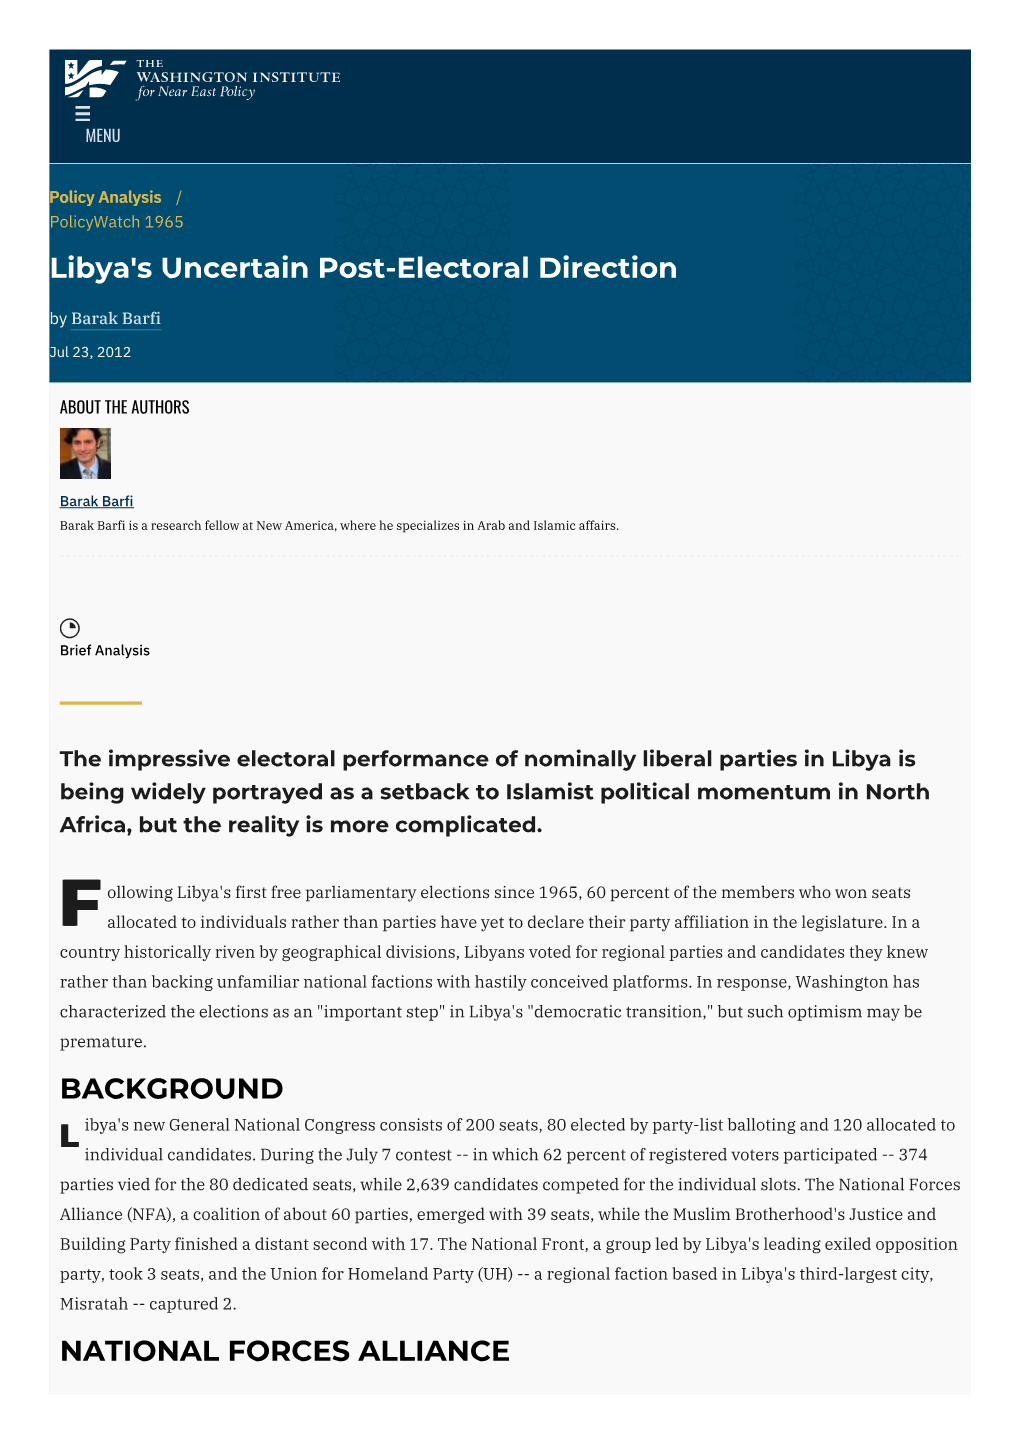 Libya's Uncertain Post-Electoral Direction | the Washington Institute